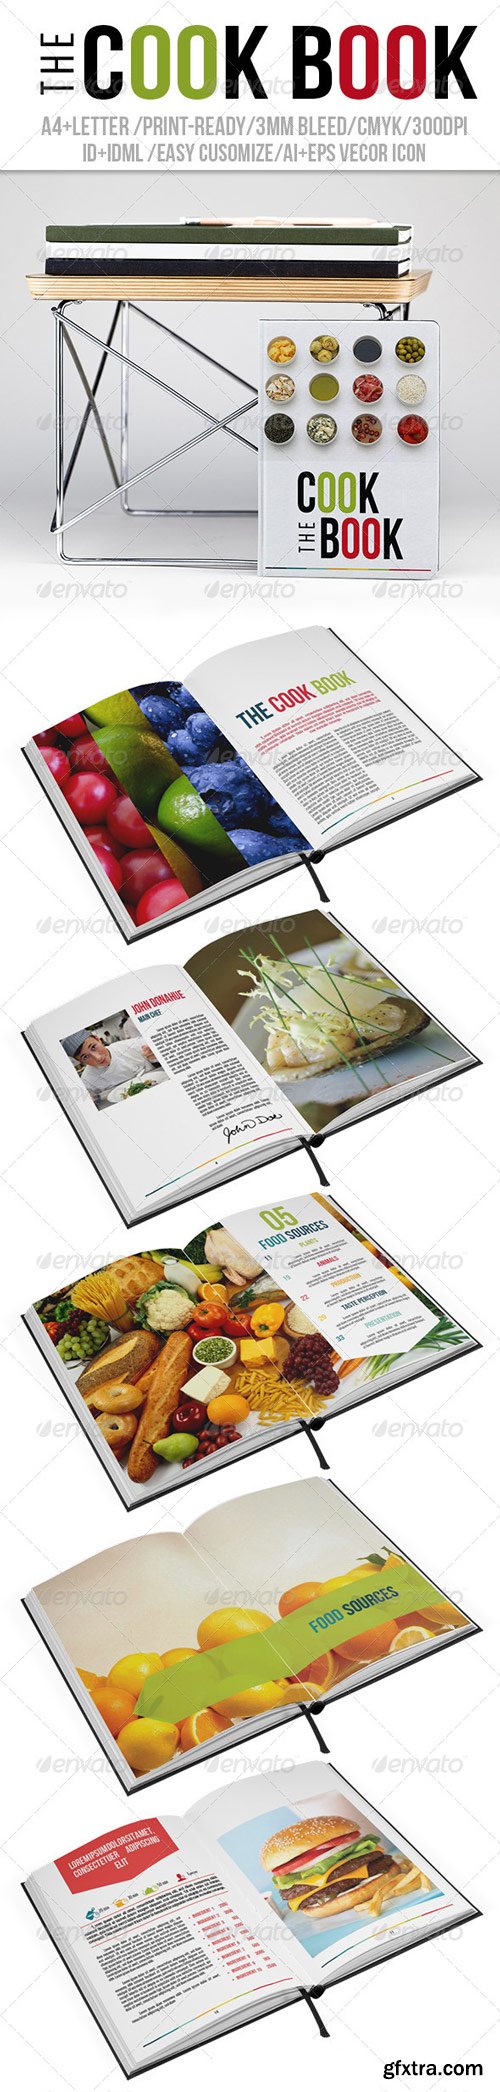 GraphicRiver - The Cook Book - 6436645